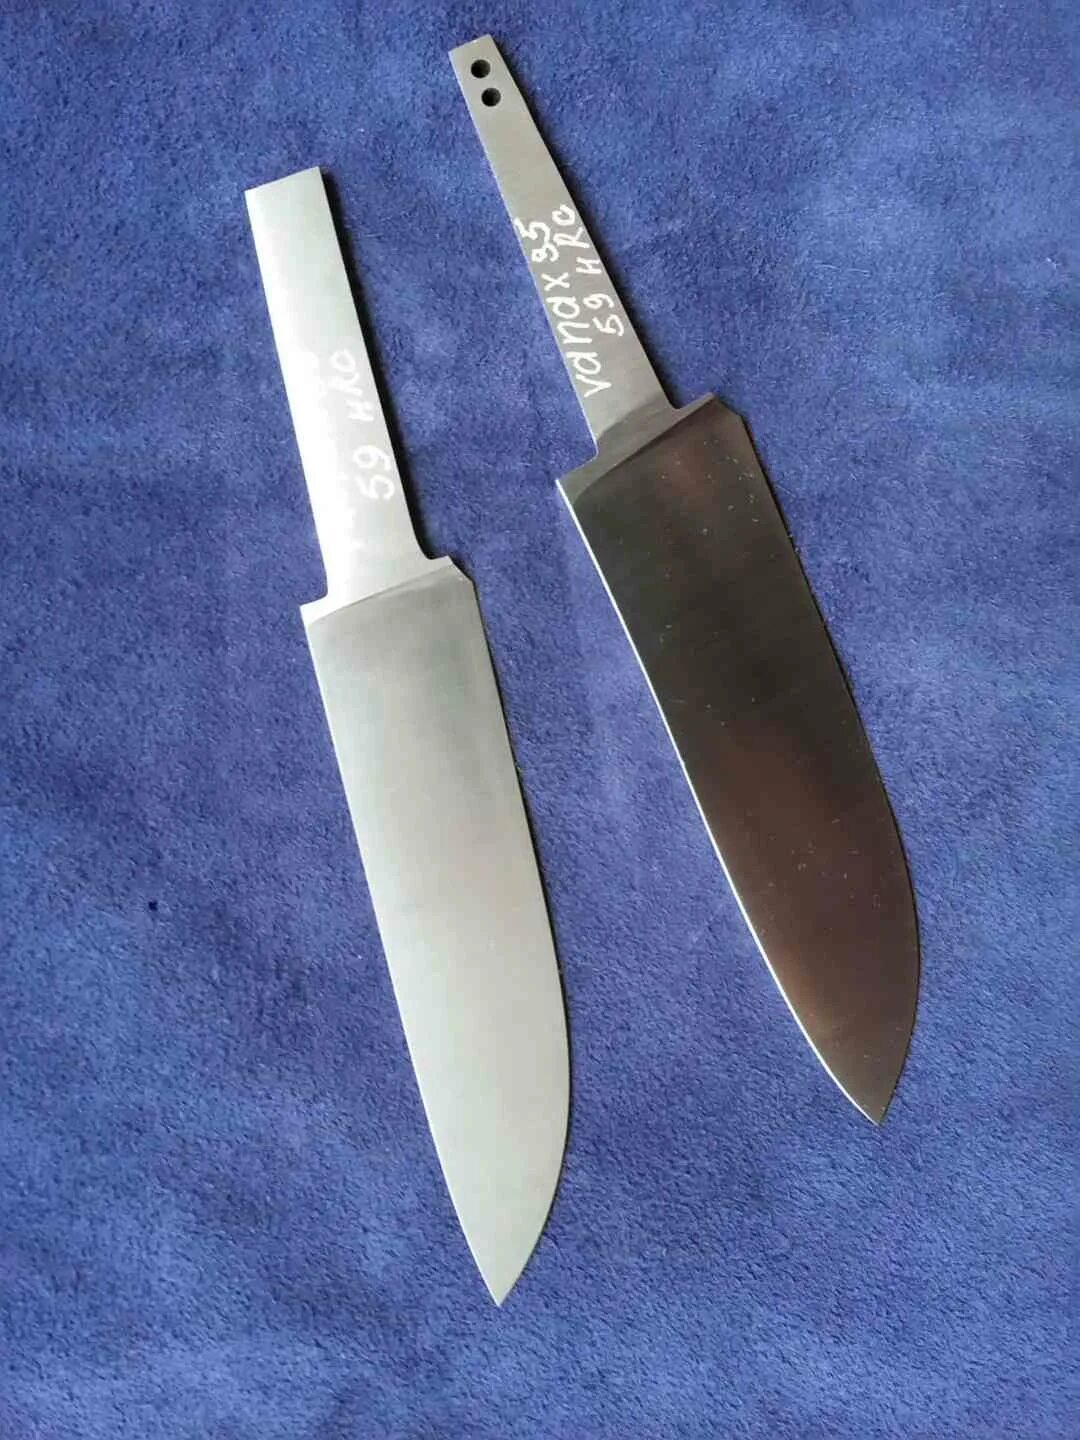 Клинок Vanax 75. Нож универсал сталь vanax75. Нож Каури. Vanax 75 нож купить.